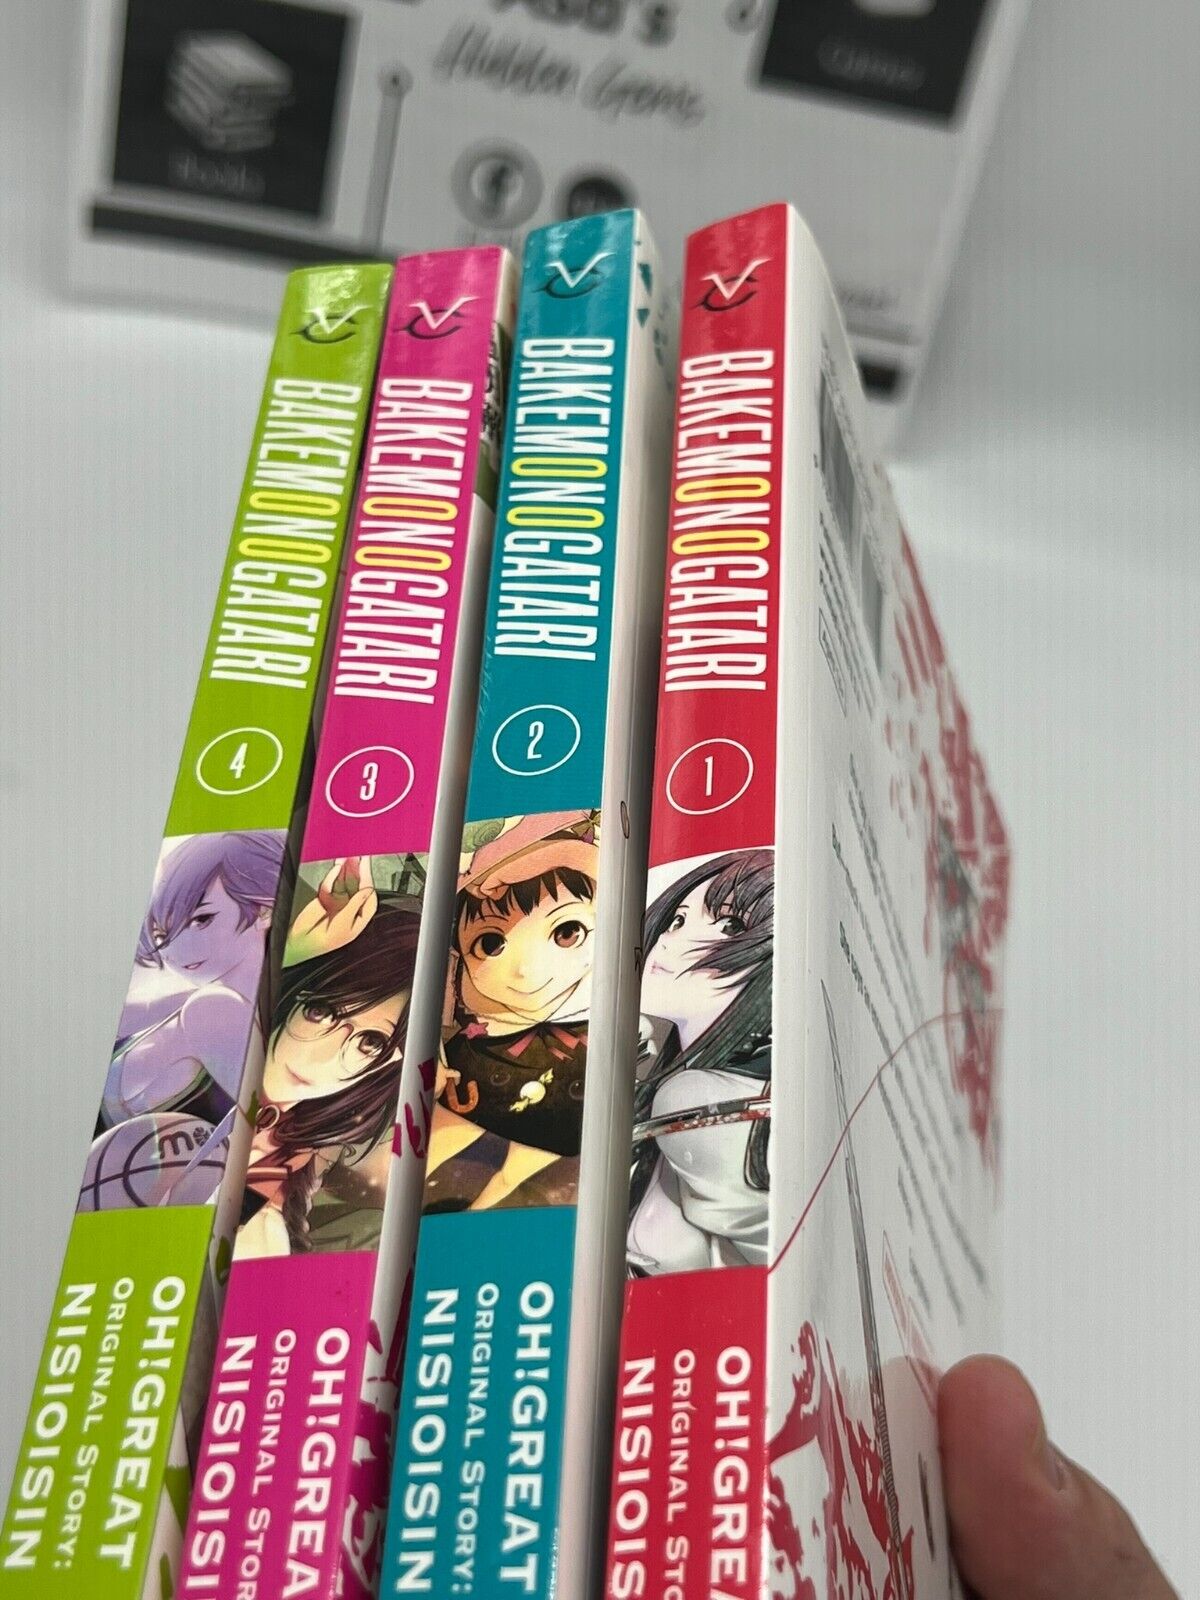 Bakemonogatari Vol.1-4 set Manga Comics Nishin Ishio Nishin Anime Books